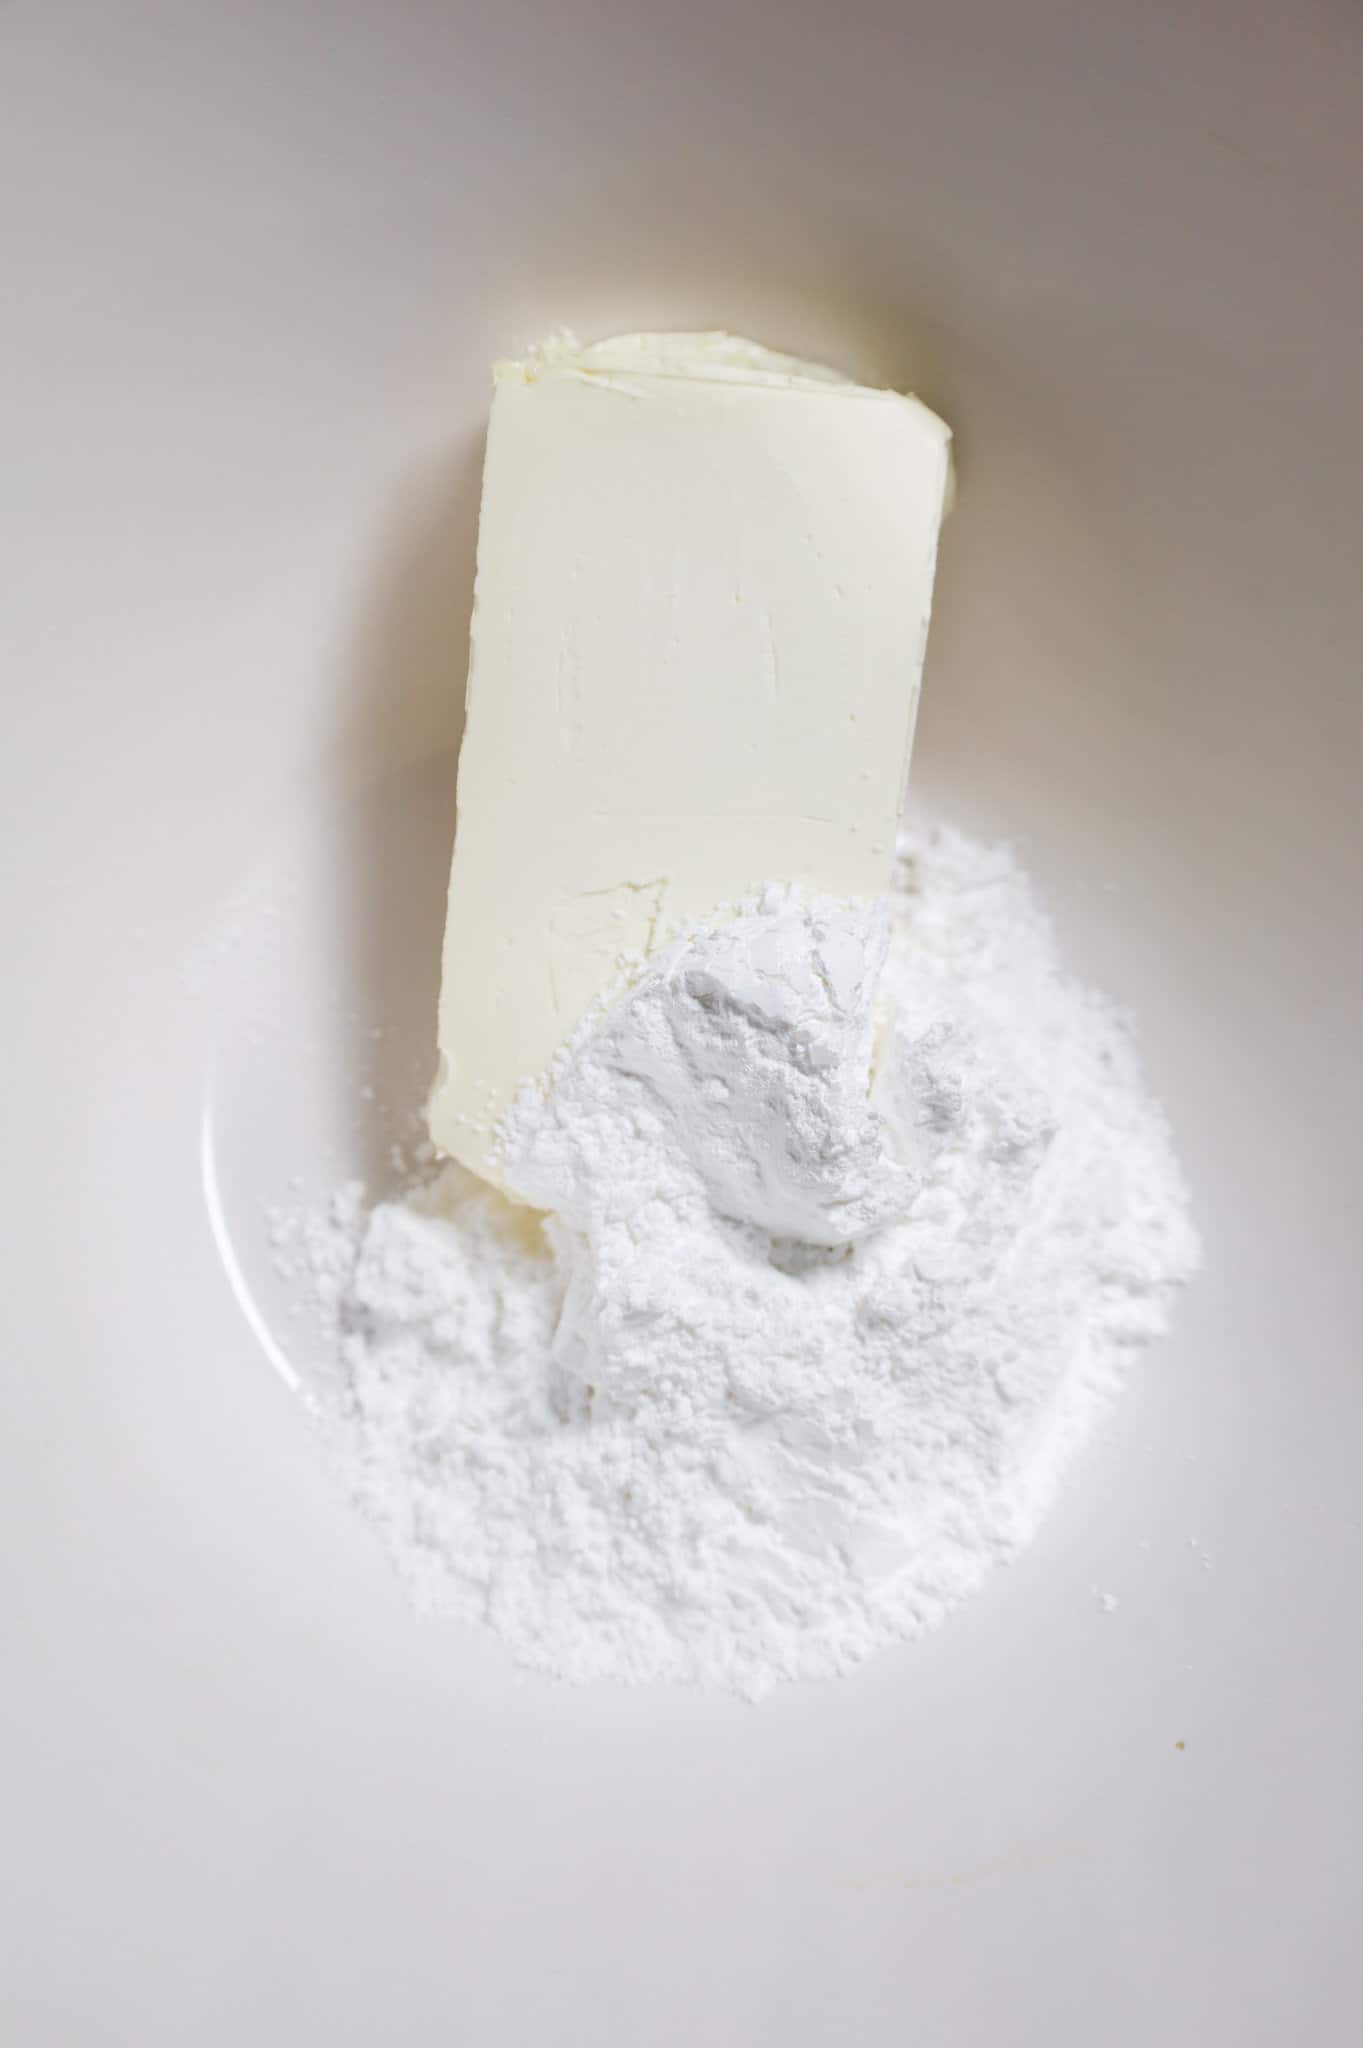 powdered sugar and cream cheese brick in a mixing bowl